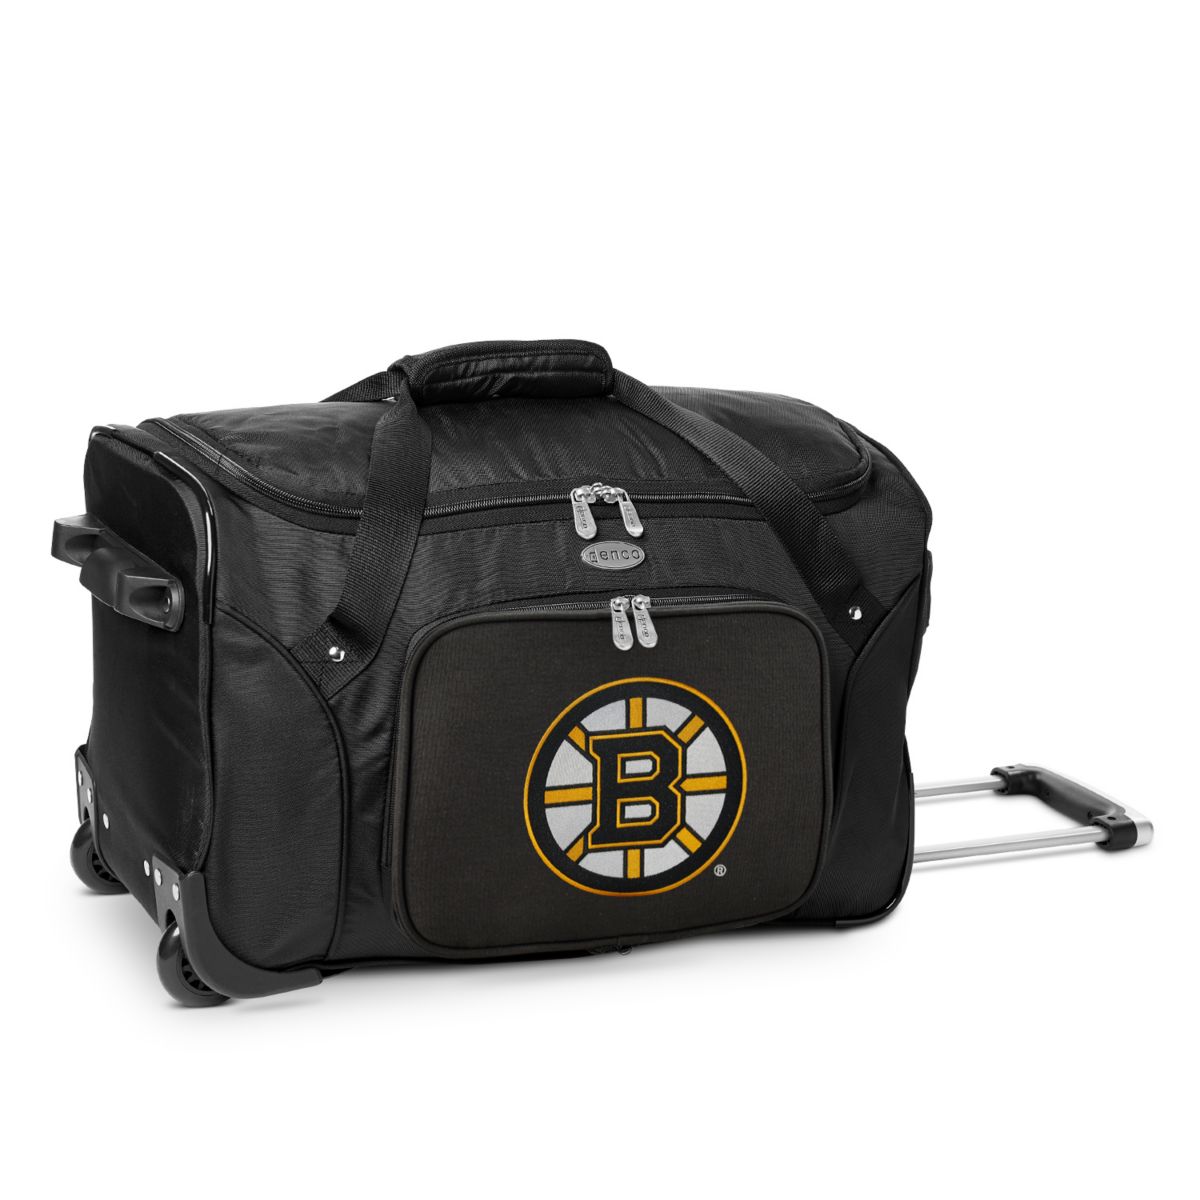 Спортивная сумка Denco Boston Bruins на колесиках для ручной клади NHL